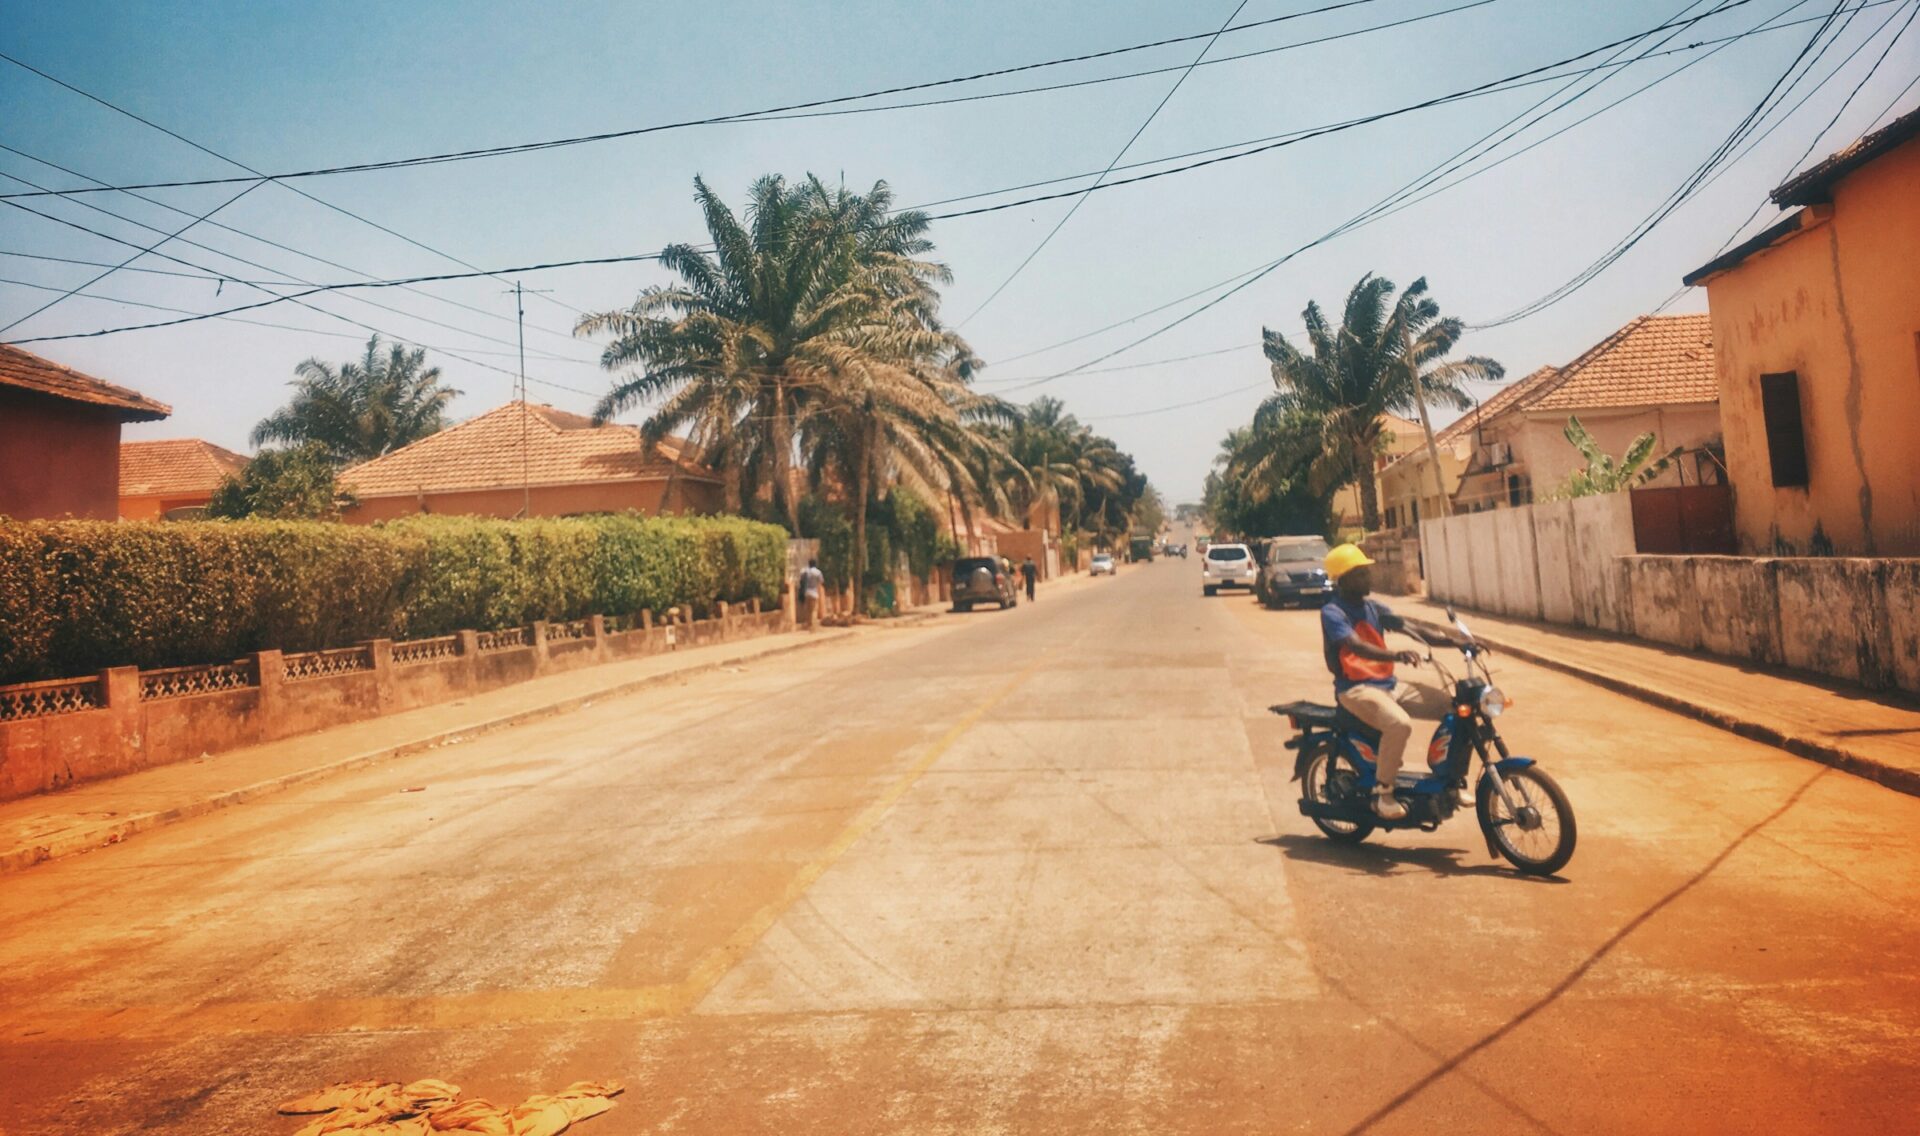 A young man rides a motorbike on a street in Bissau (Kaysha via Unsplash)